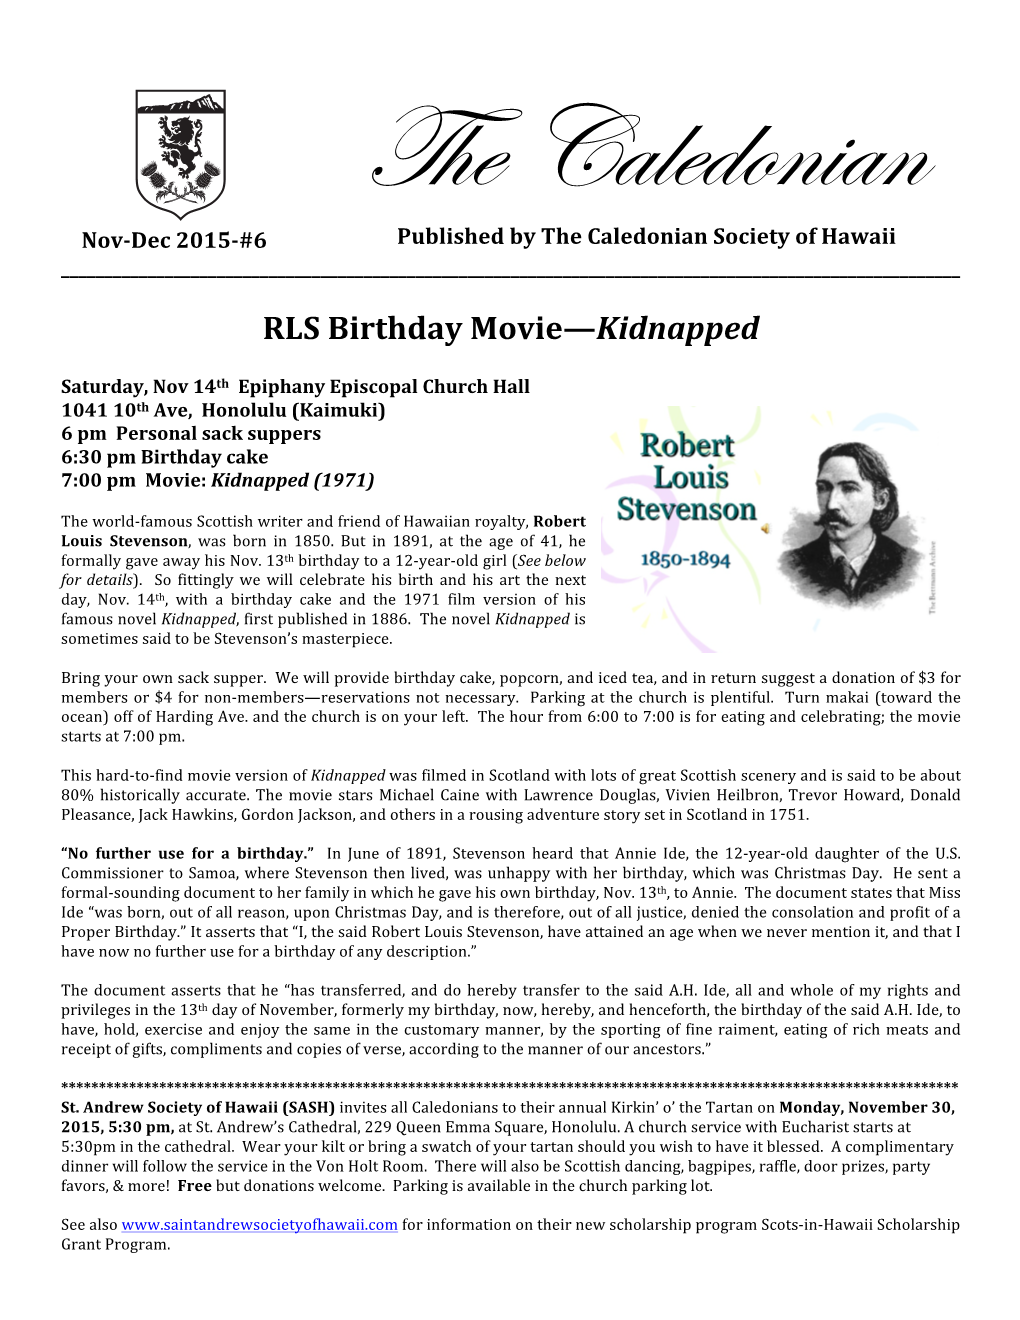 RLS Birthday Movie—Kidnapped